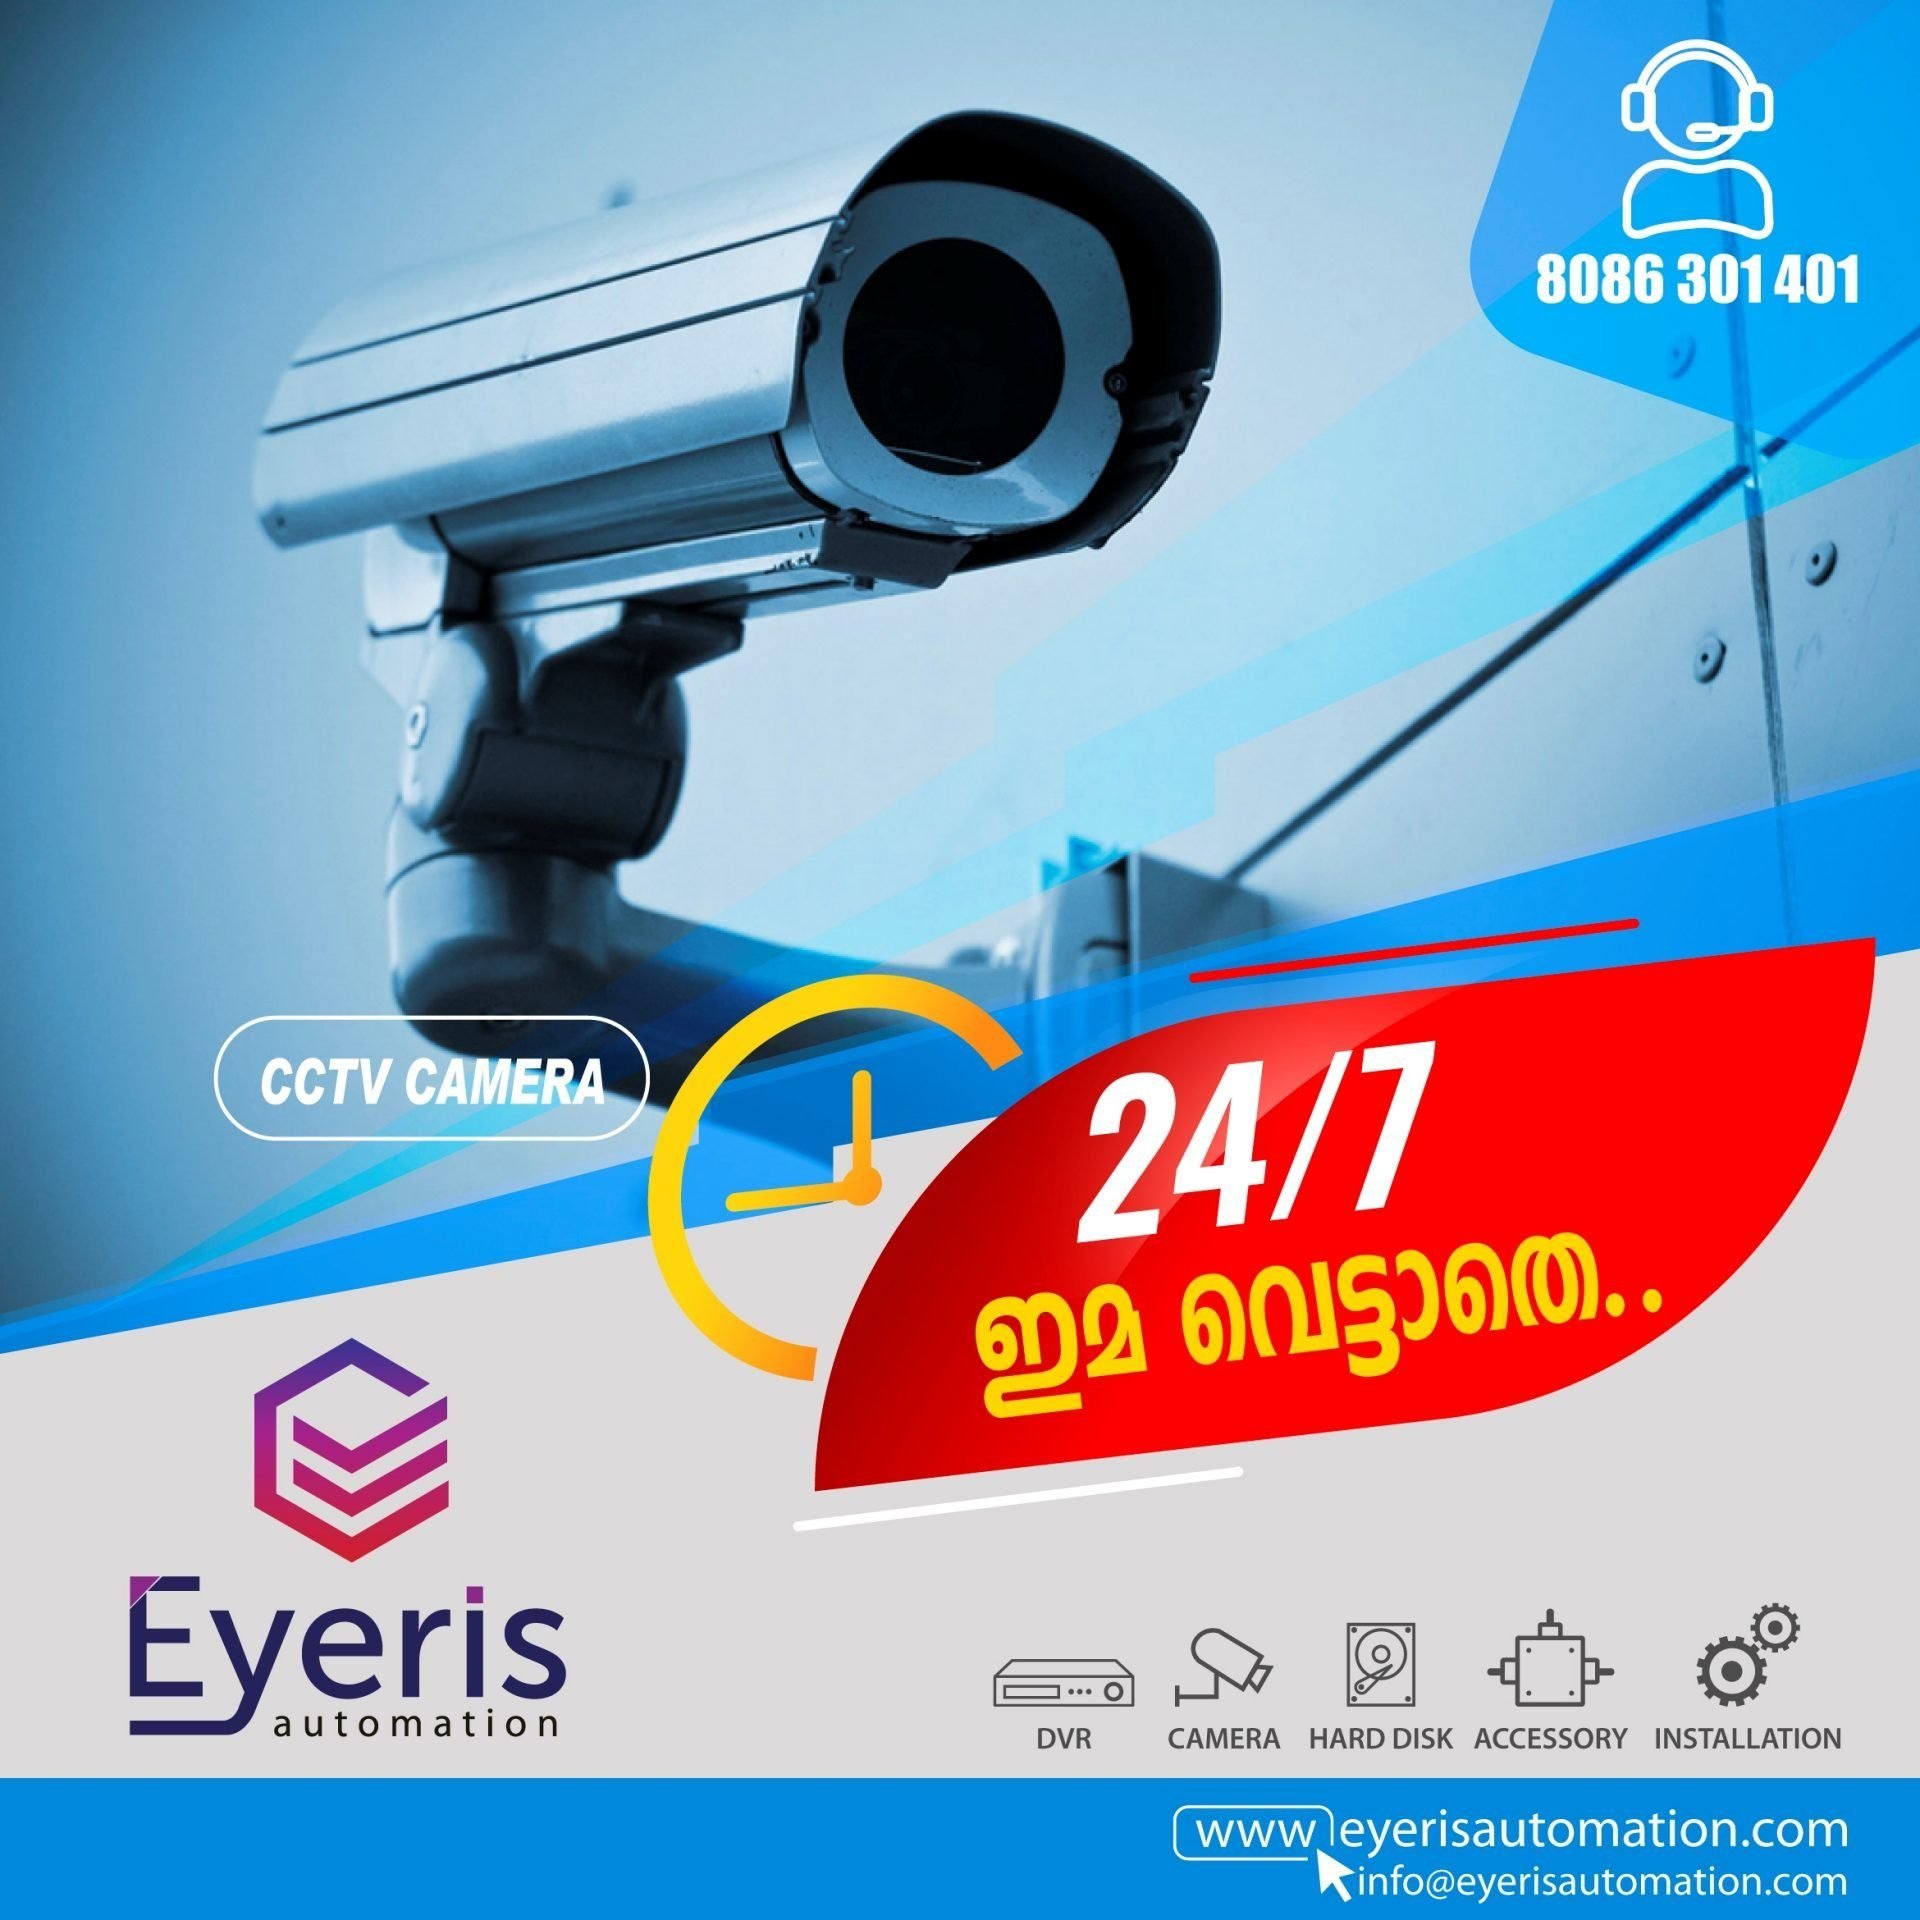 Eyeris Automation